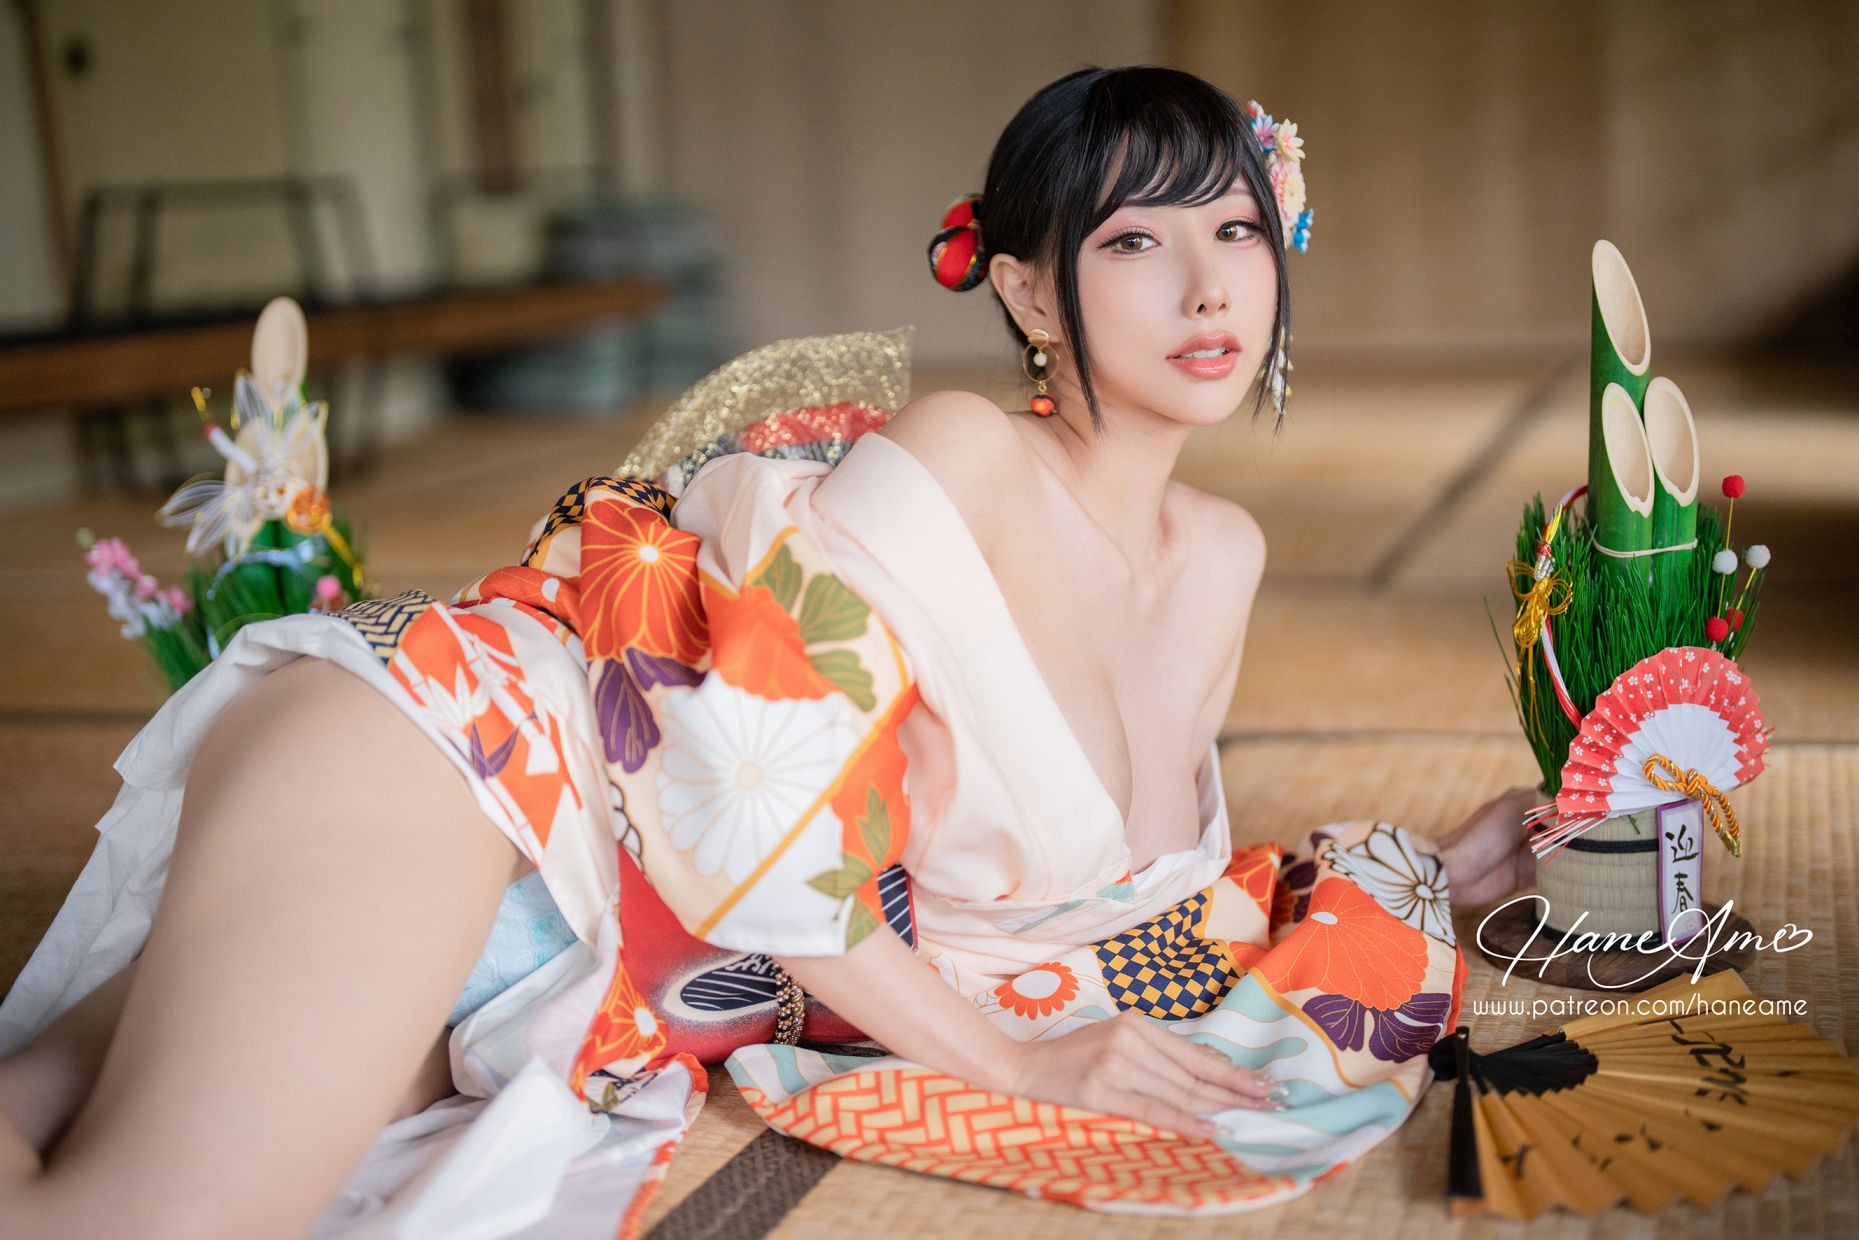 HaneAme 雨波 — Flower Print Kimono Girl(22)